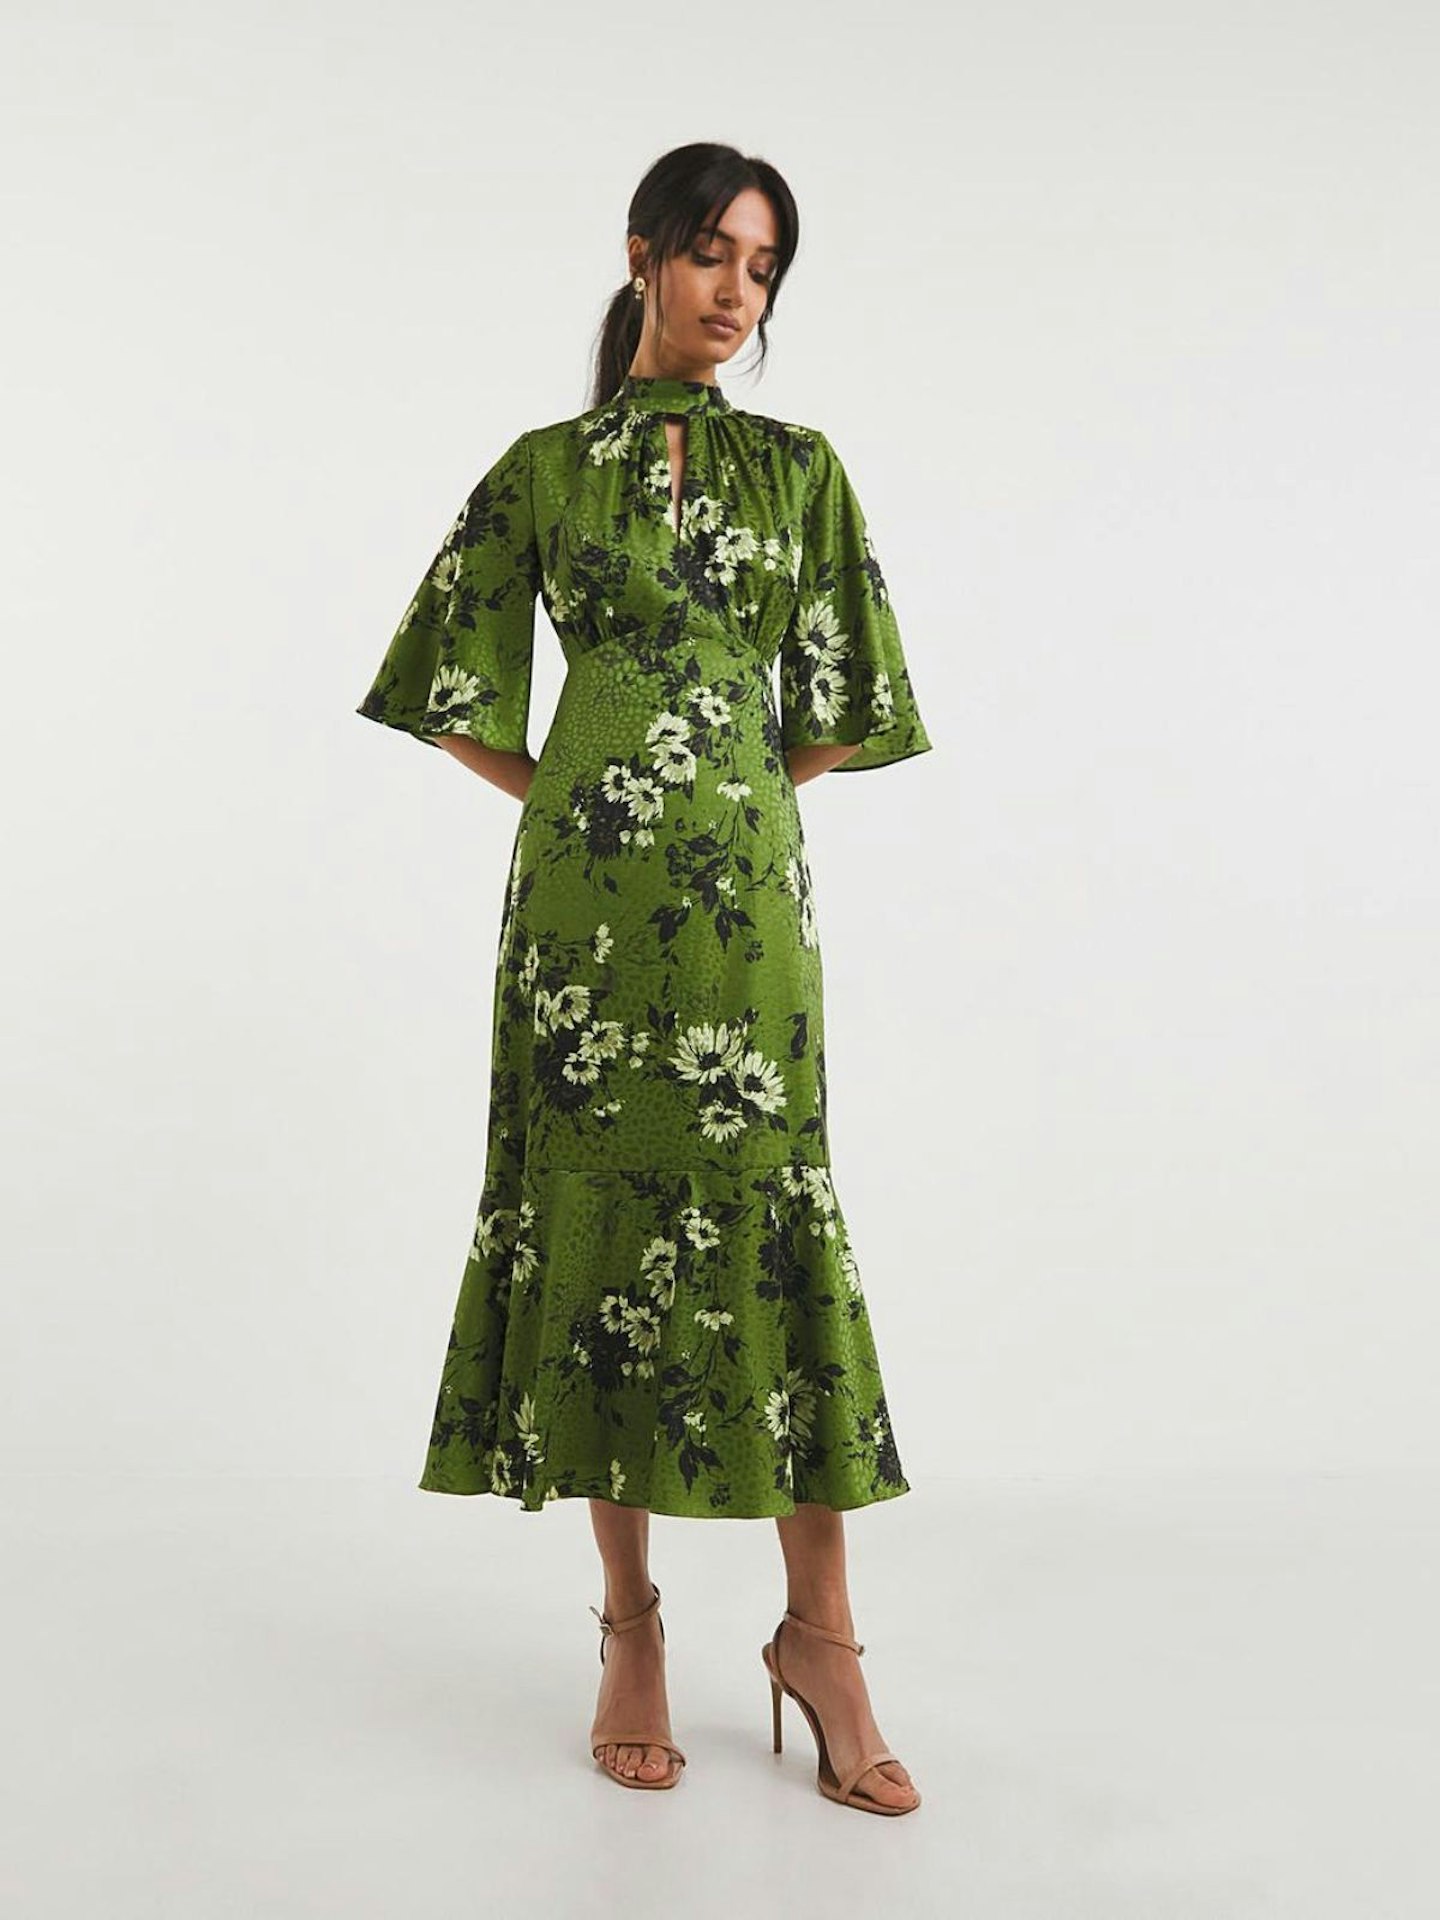 Joanna Hope Satin Jacquard Green Floral Keyhole Maxi Dress